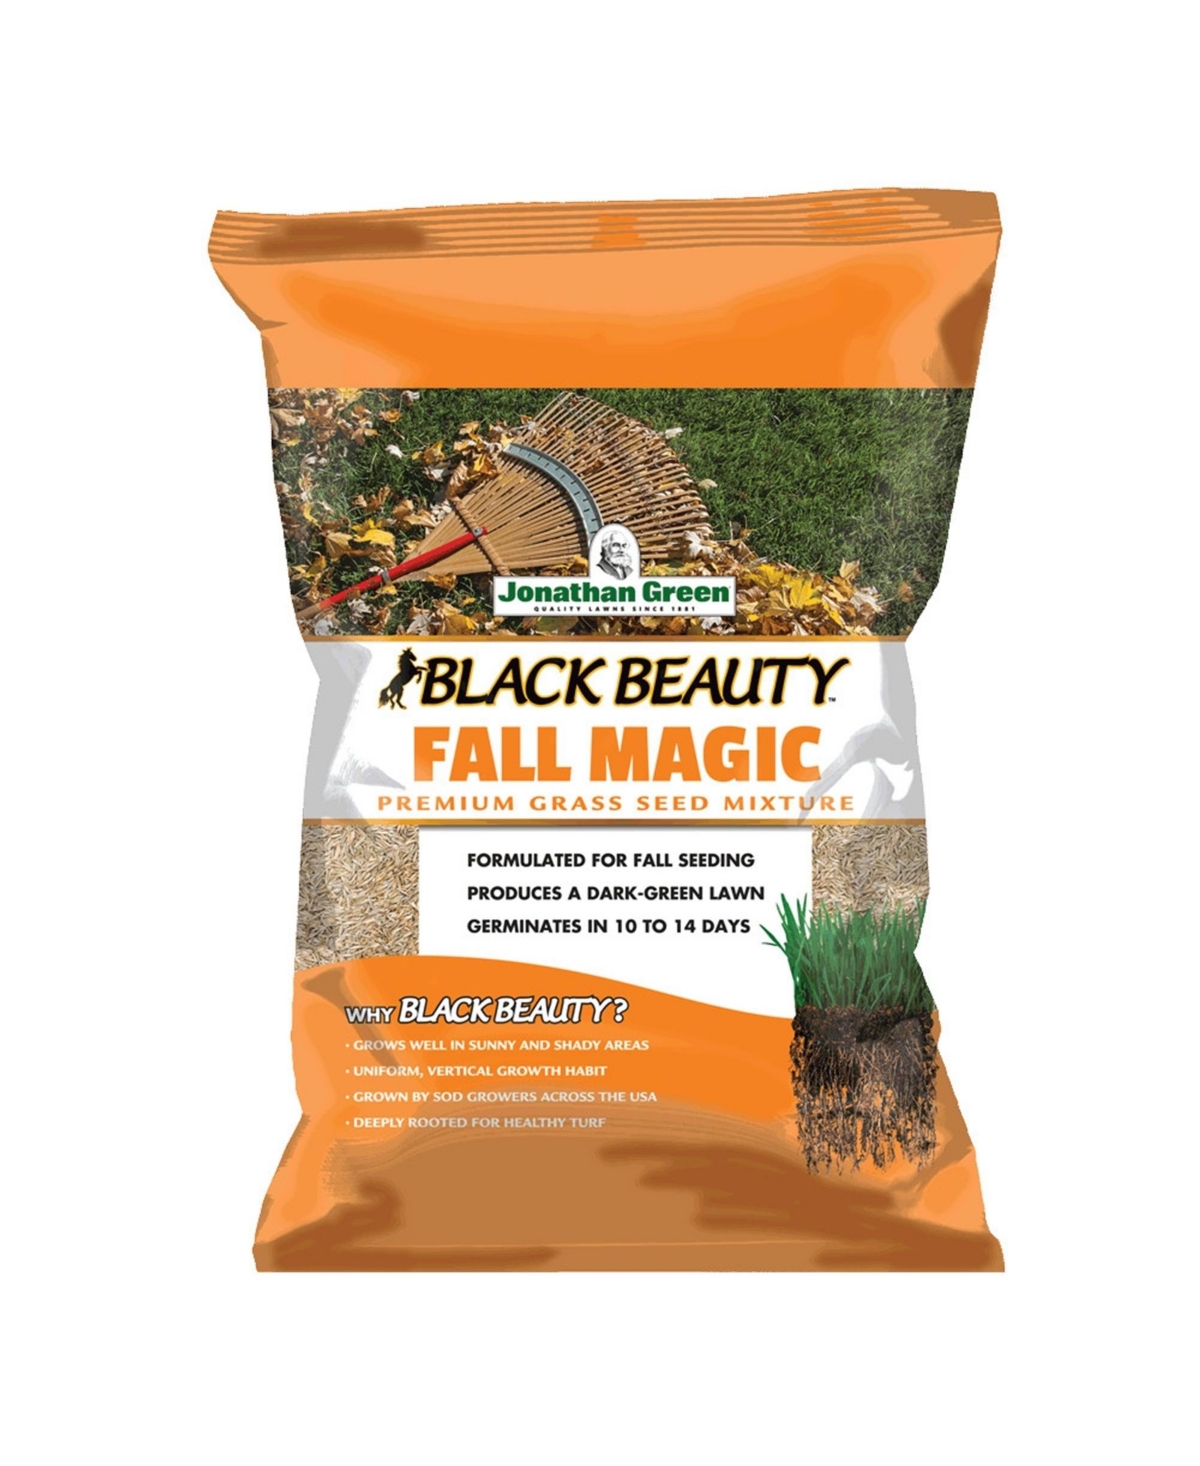 (#10770) Black Beauty Fall Magic Grass Seed, 25lb bag - Brown